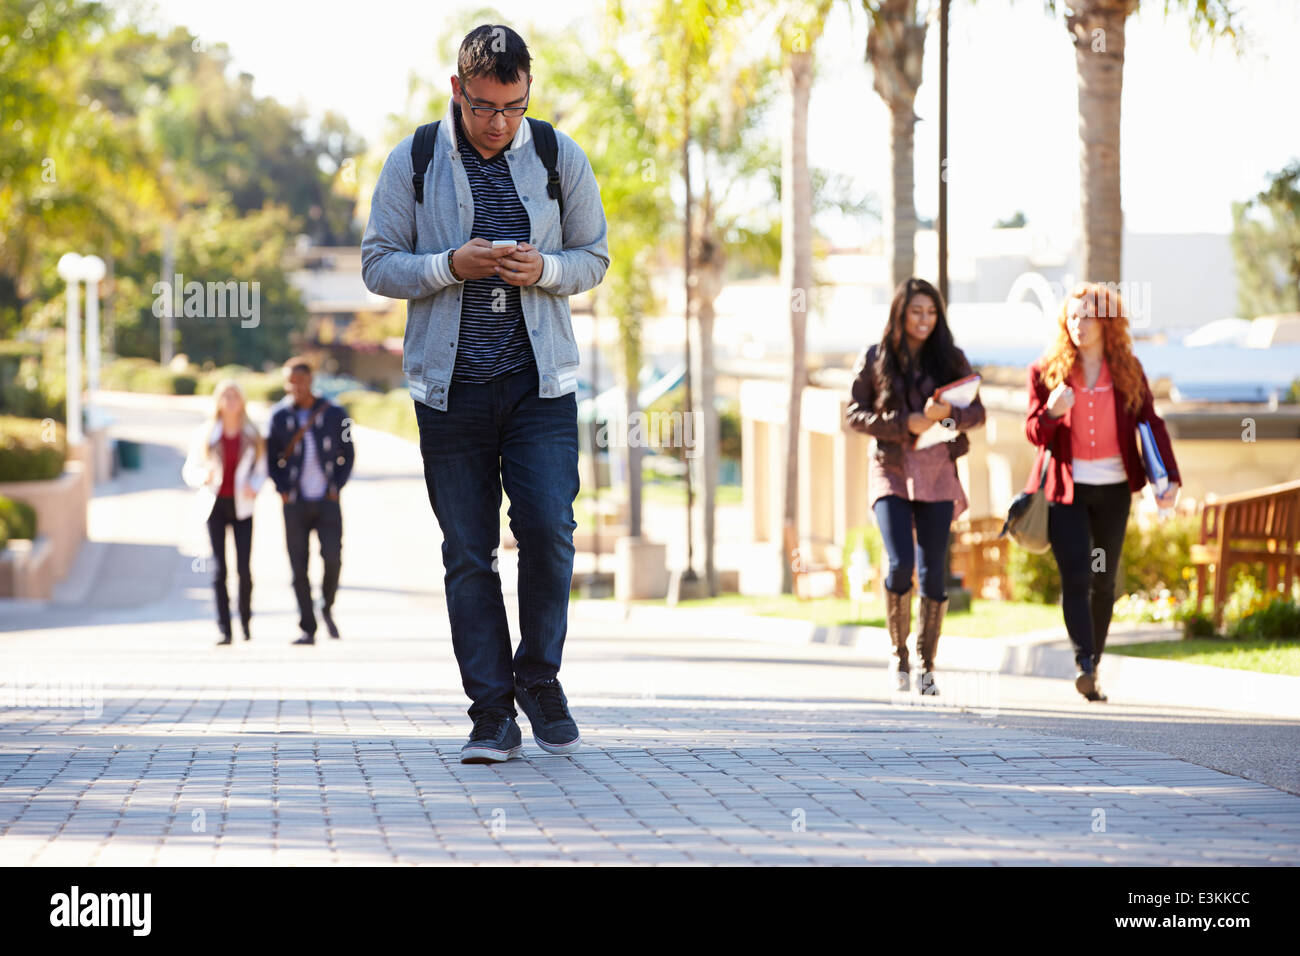 Students Walking Outdoors On University Campus Stock Photo